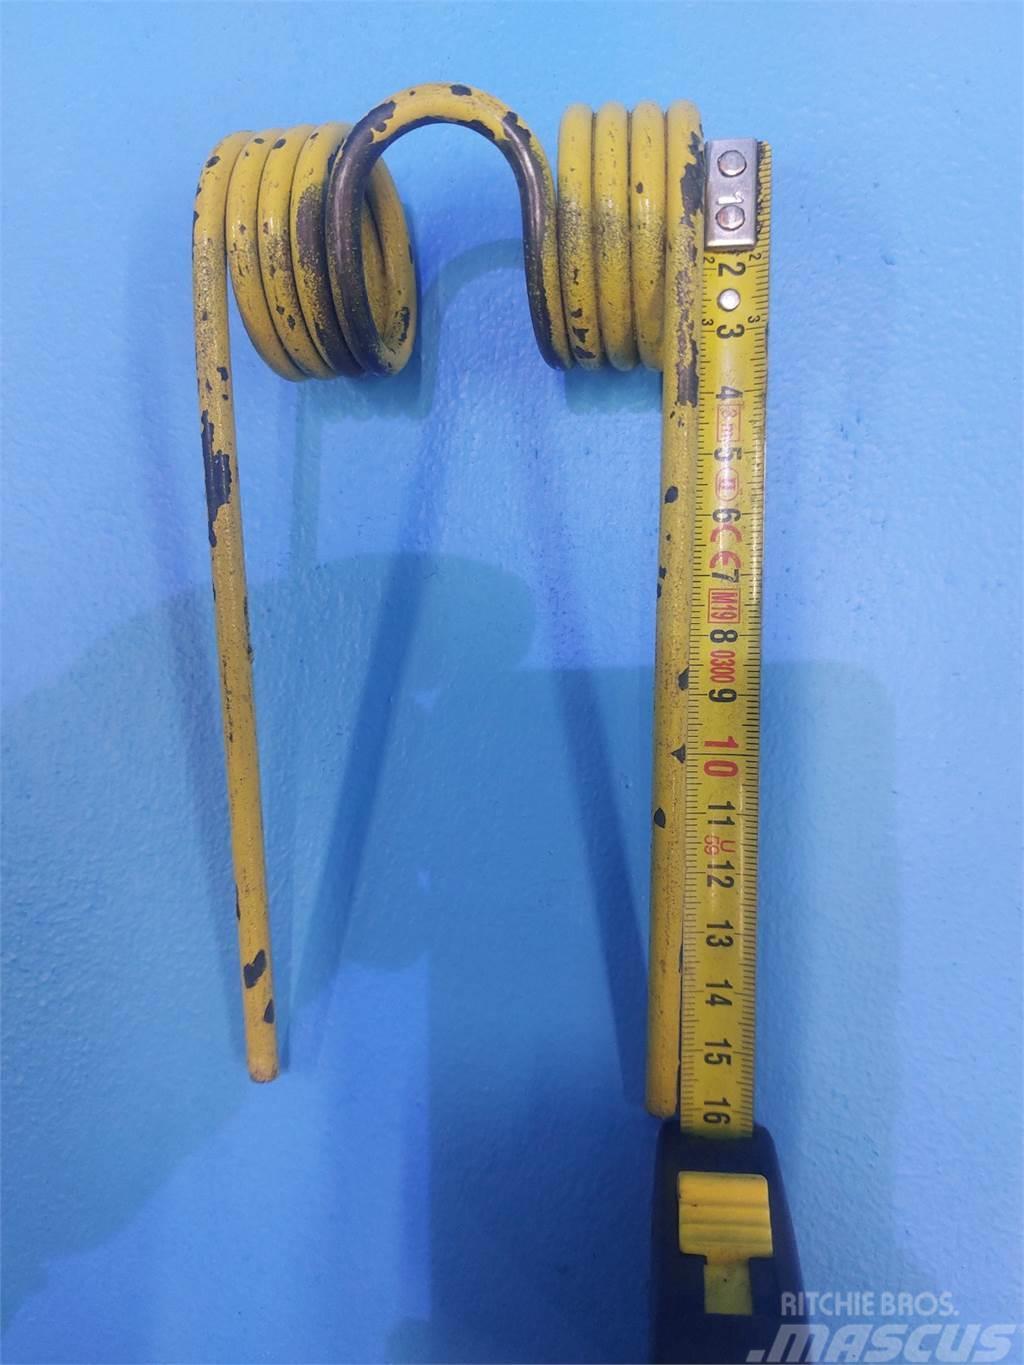  Pick-up Fjedre (19stk) Længde 17cm-Bredde 7.5cm. Drugi kmetijski stroji